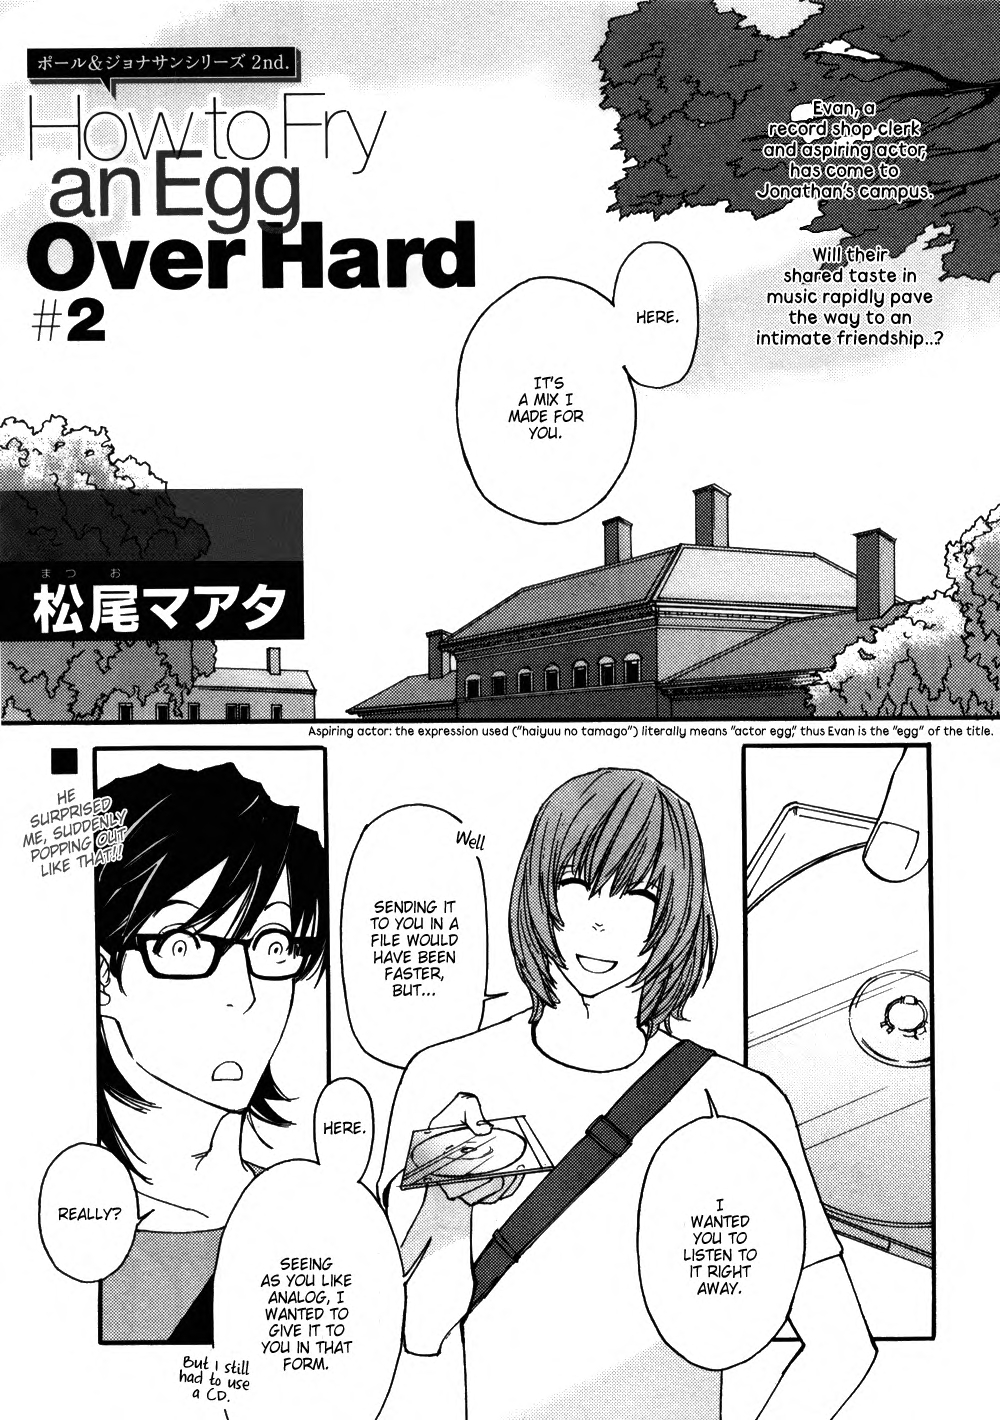 Ayamachi Wa Shinshi No Tashinami Vol.1 Chapter 3: How To Fry An Egg Over Hard #2 - Picture 1